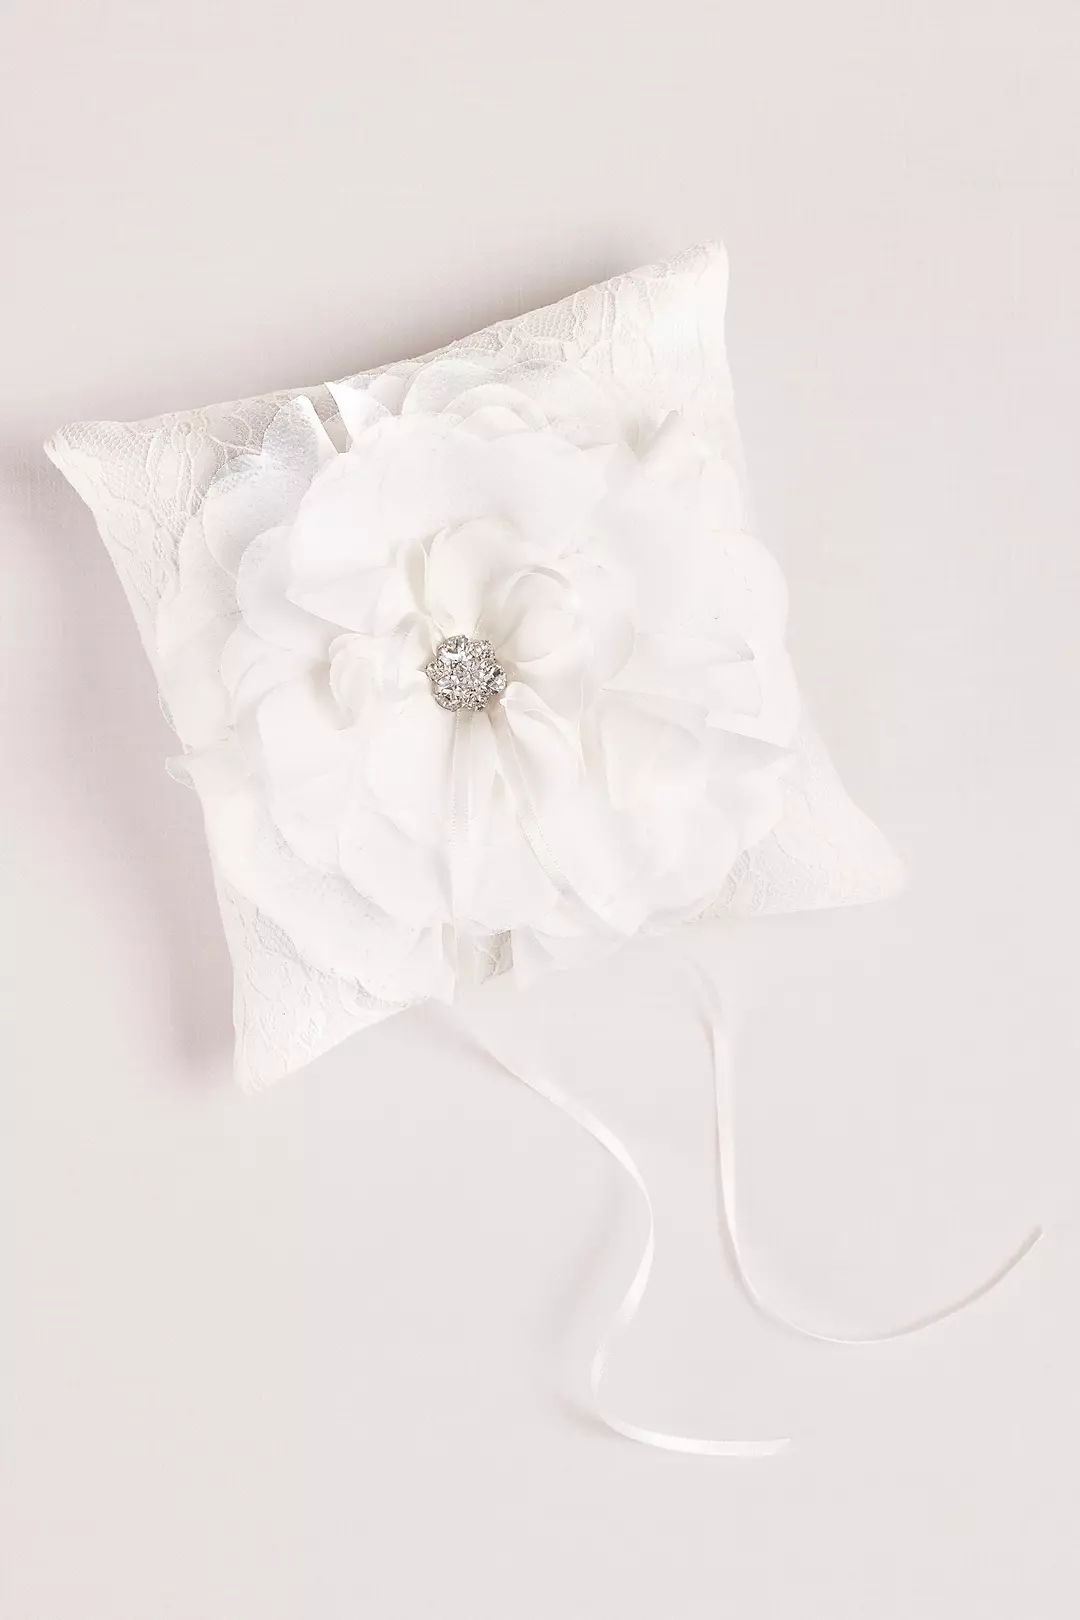 Layered Flower Ring Pillow Image